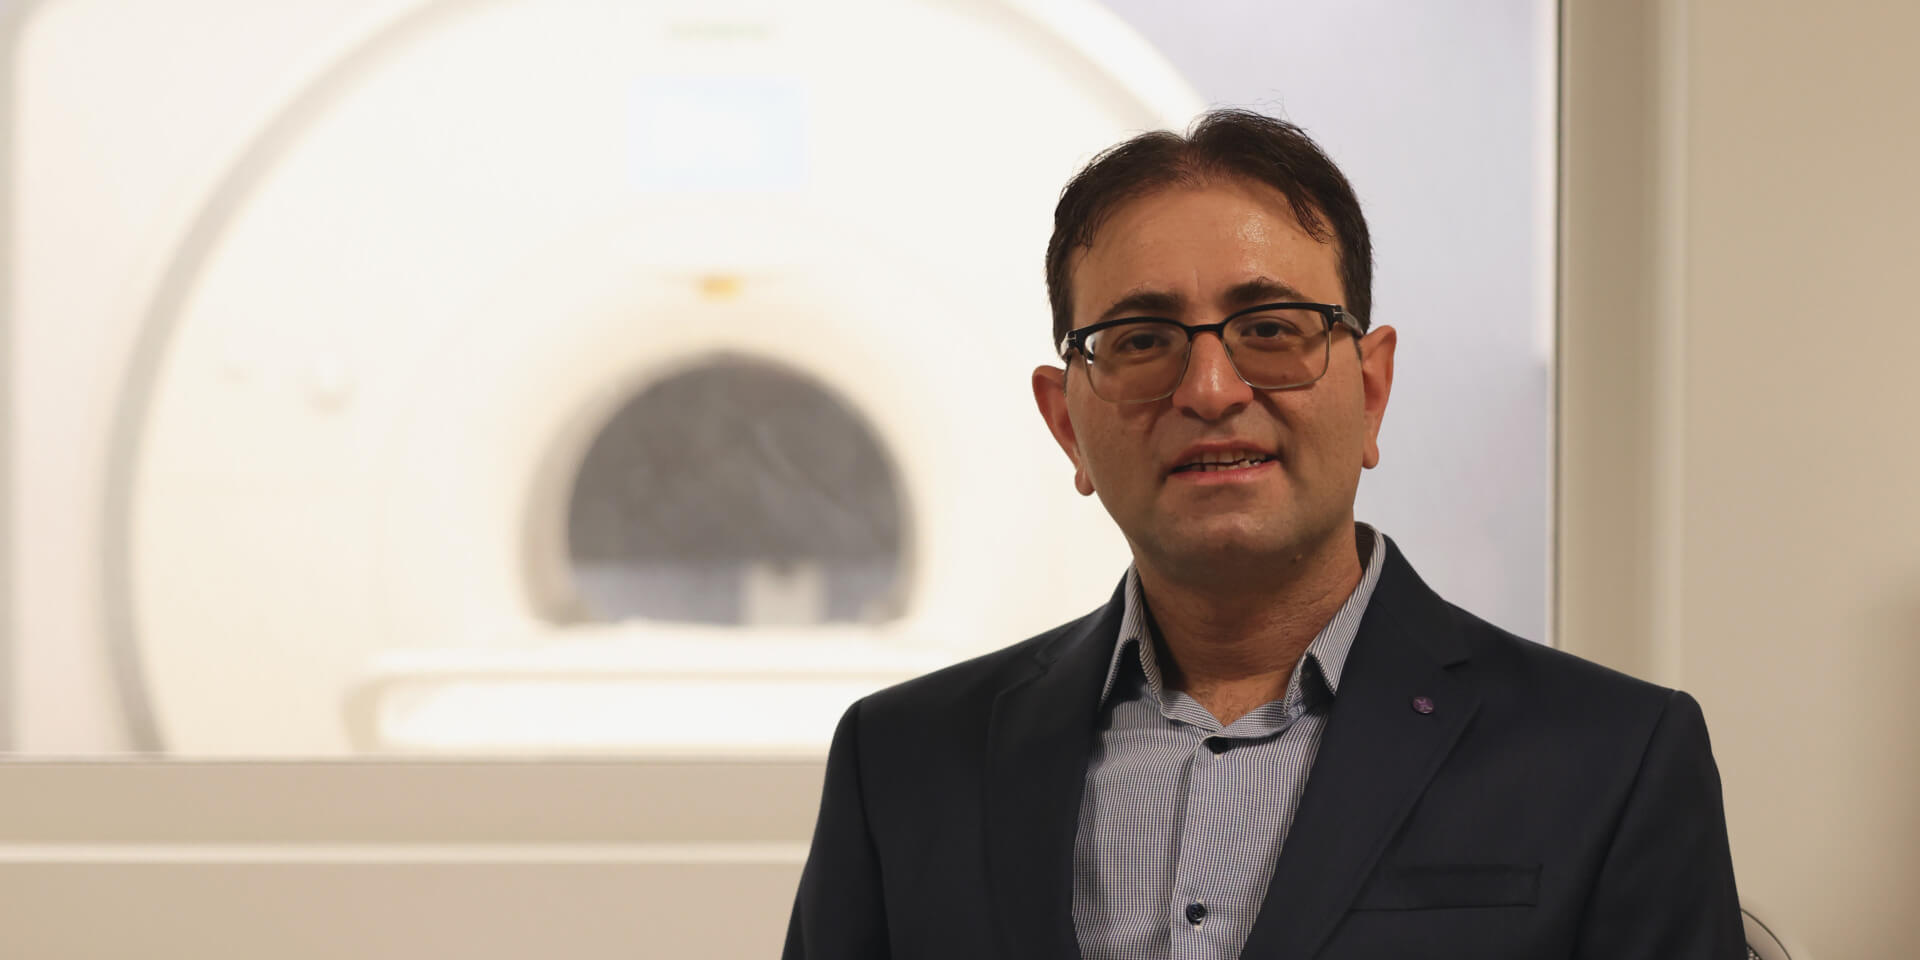 Mahdi Soltanolkotabi Receives NIH Director’s New Innovator Award for Reliable AI for MRI